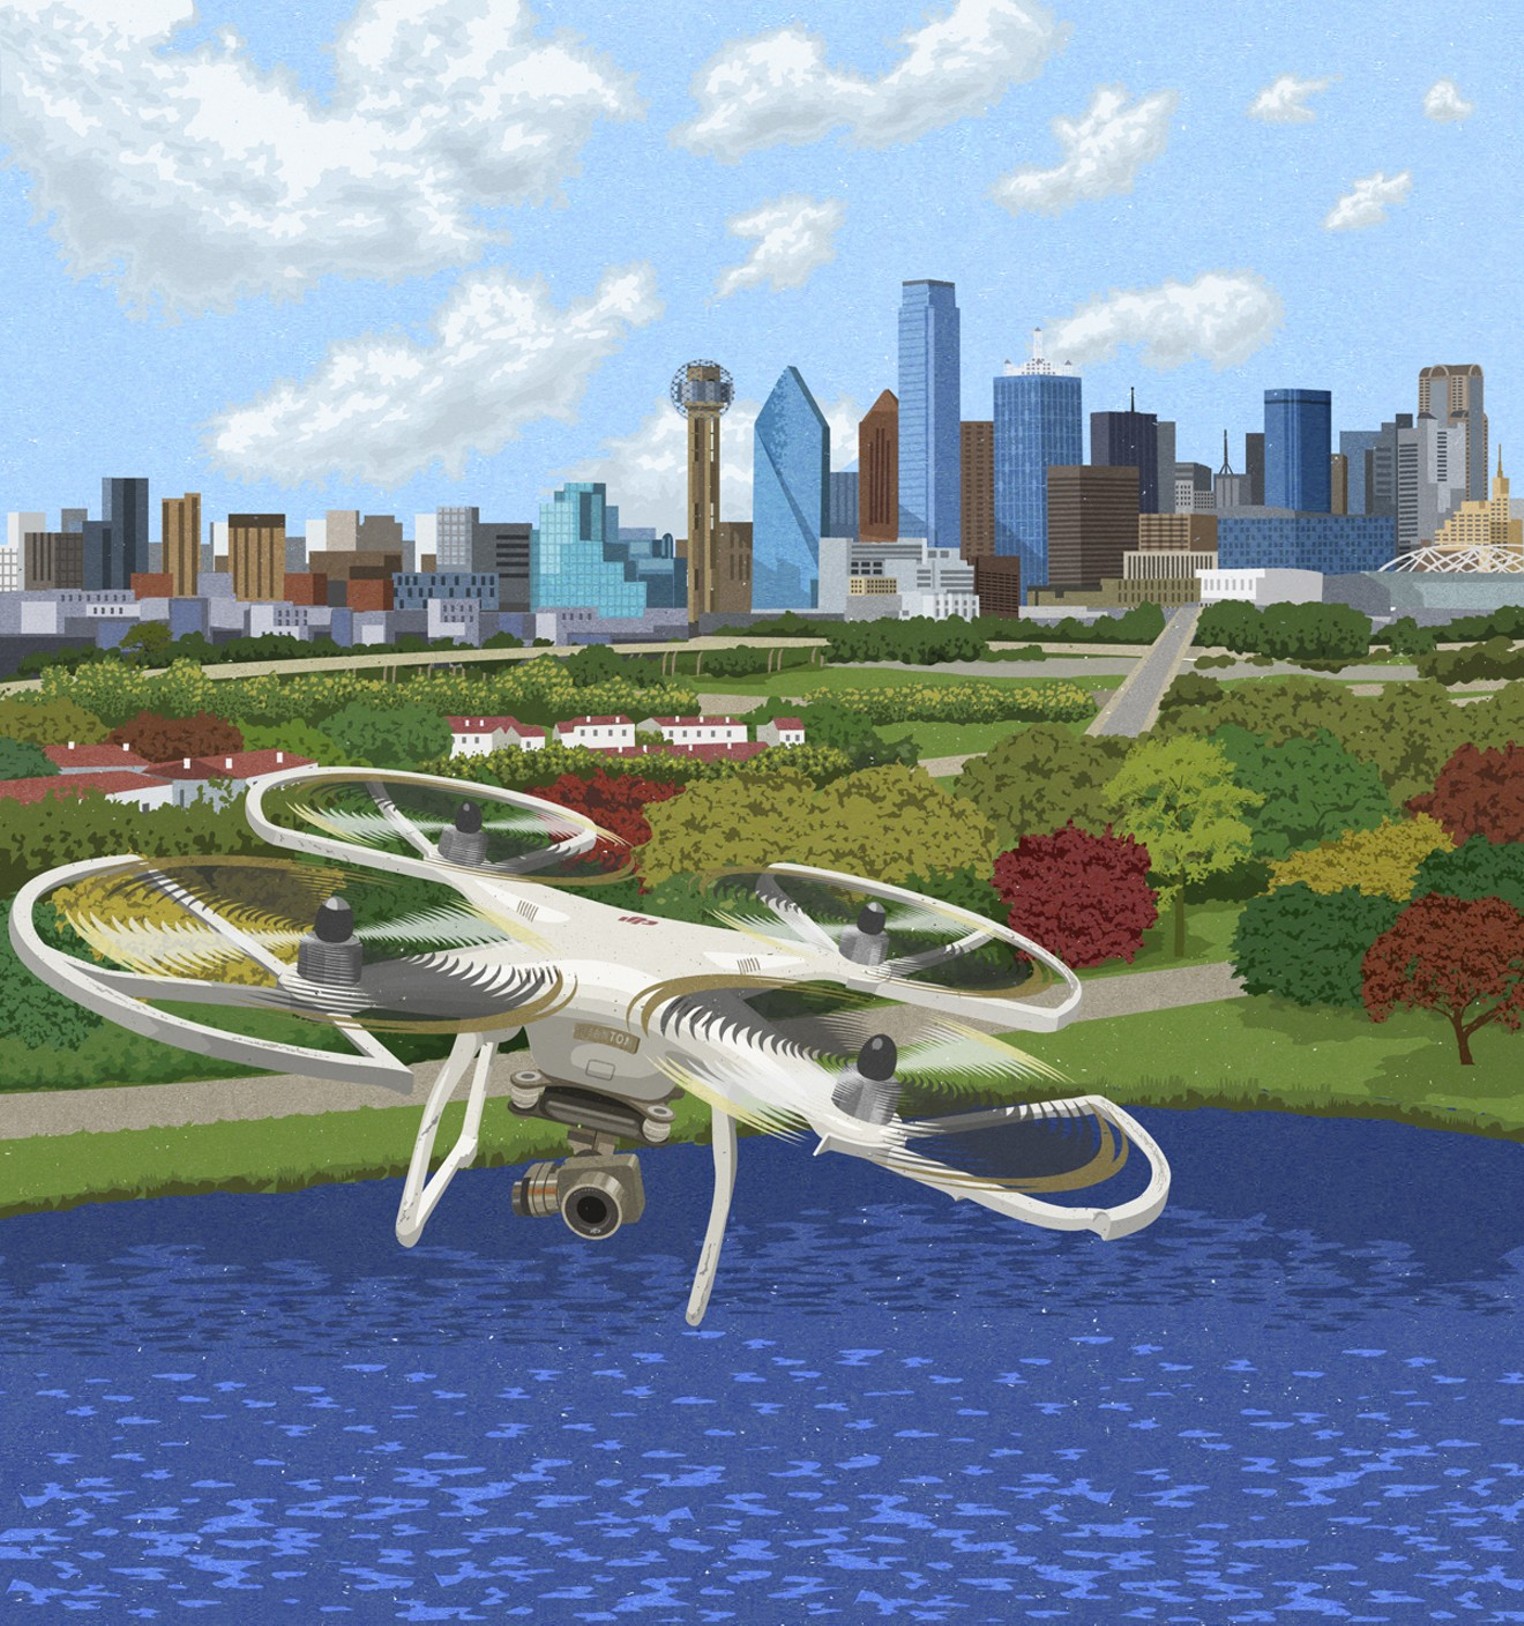 Texas Anti-Drone Photography Law Violates First Amendment, Judge Rules